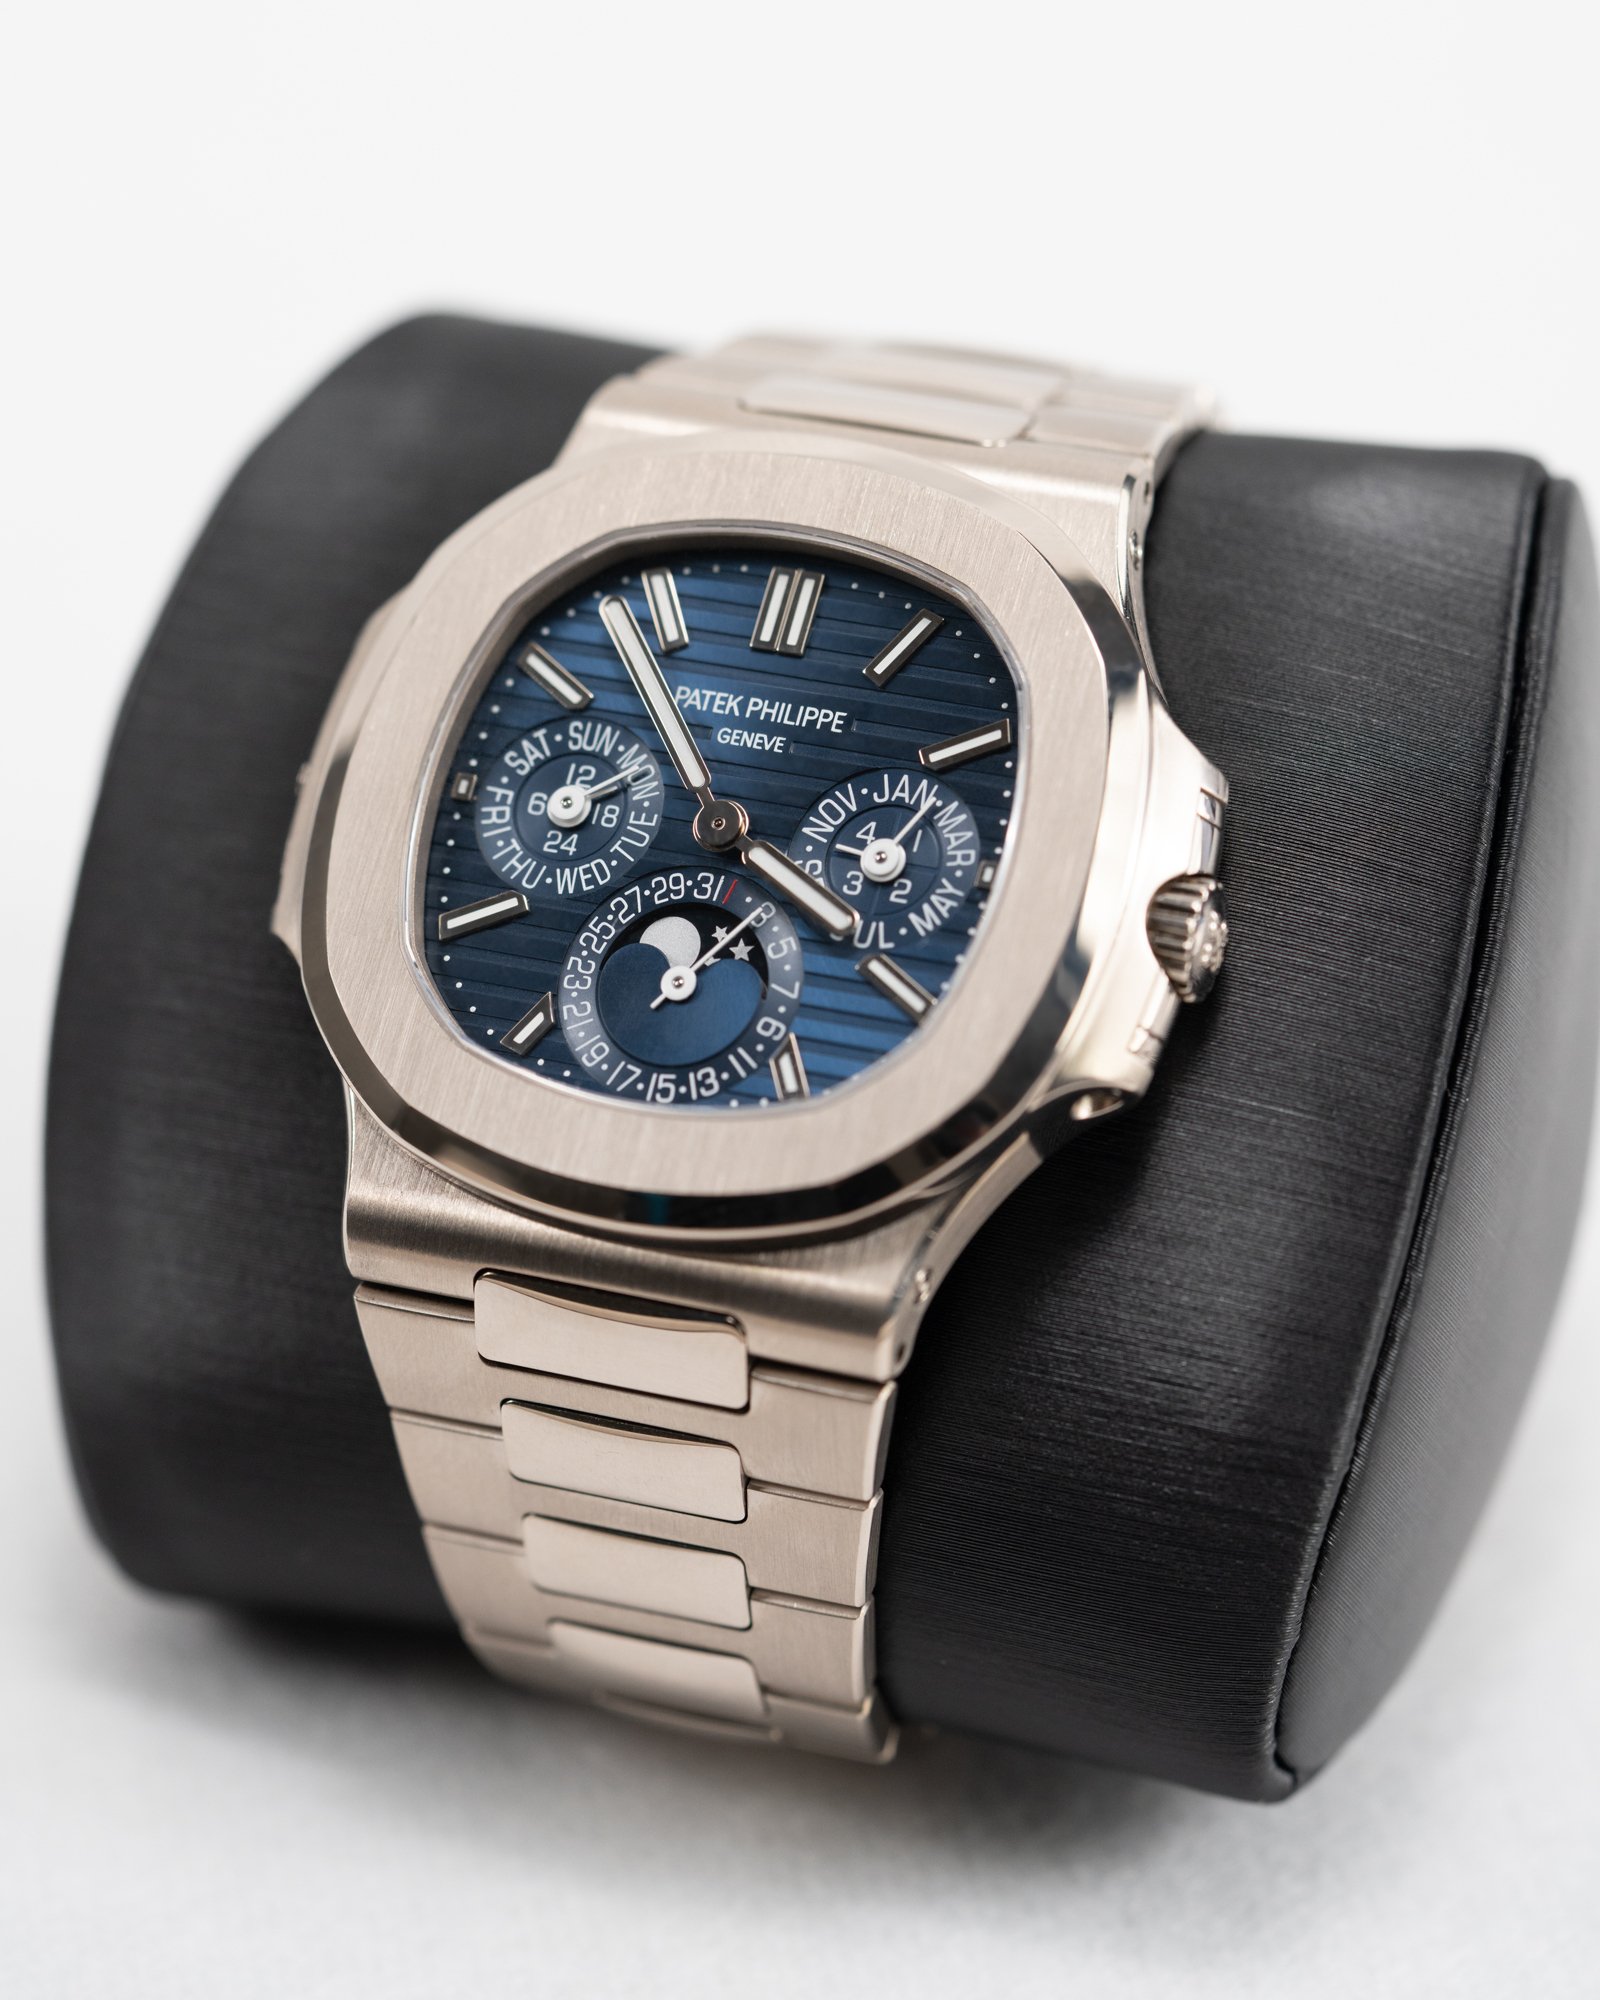 Patek Philippe Nautilus 5740/1G-001 Perpetual Calendar Moonphase 2018 | Luxury Watches